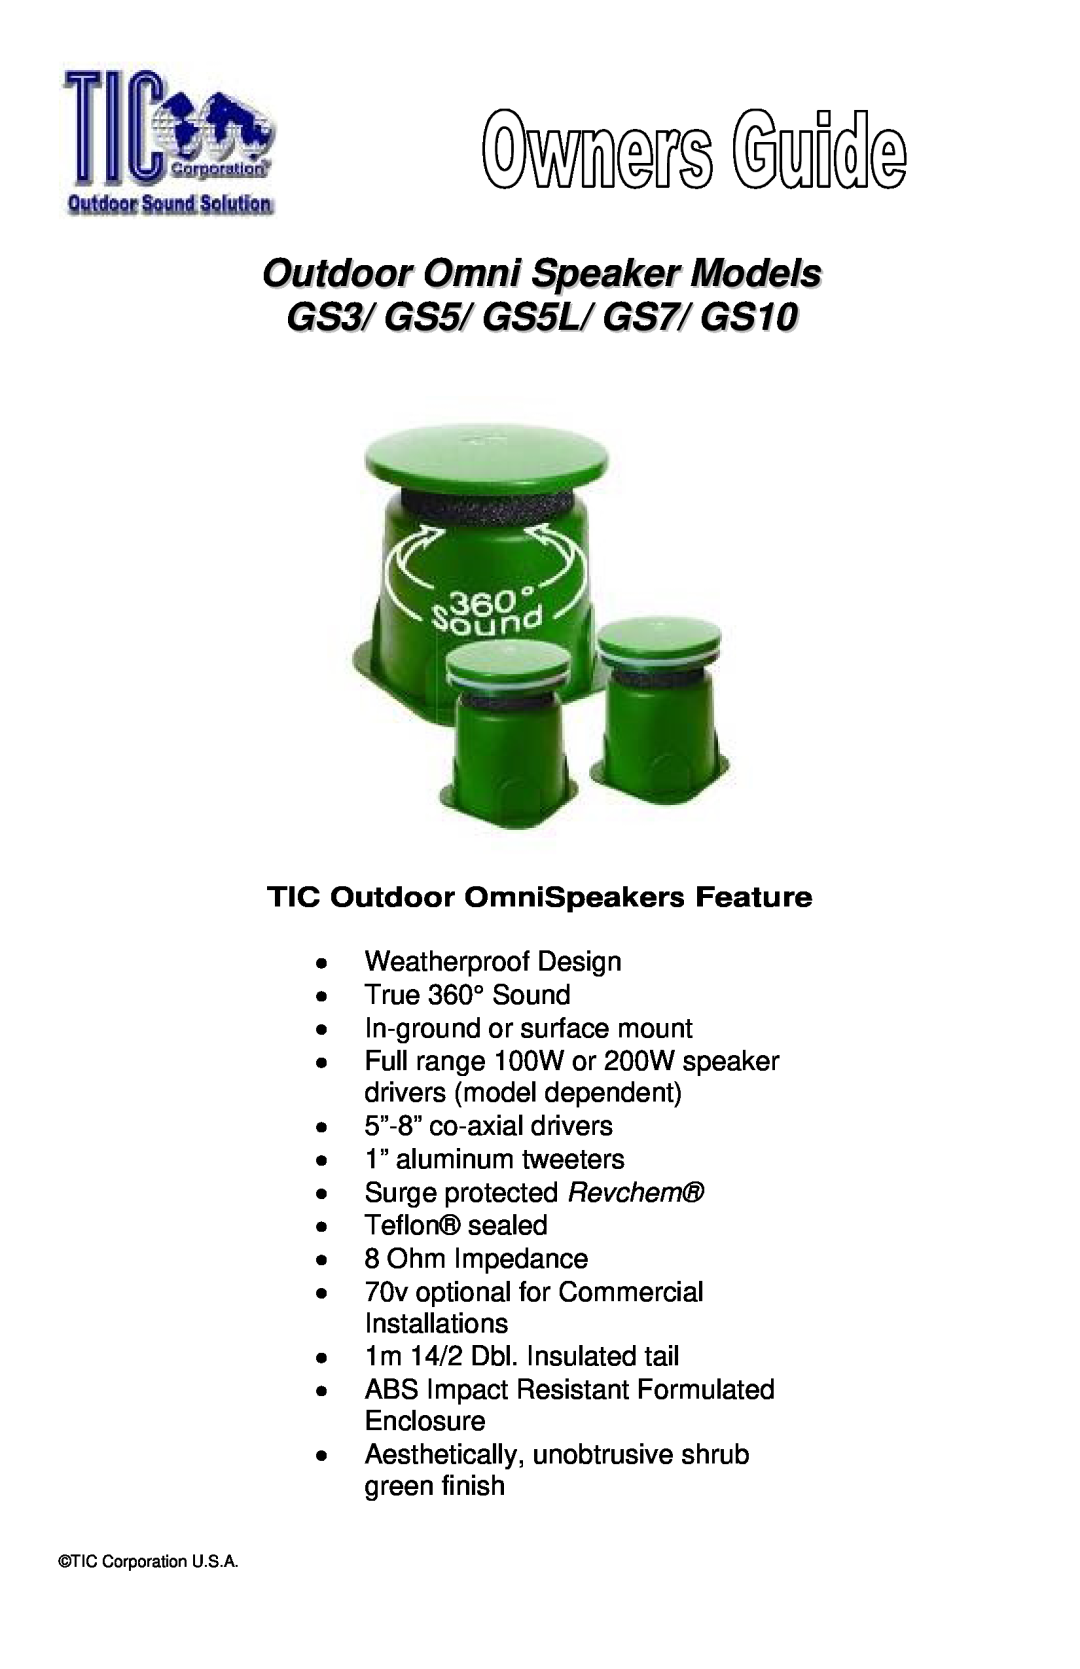 TIC manual Outdoor Omni Speaker Models GS3/ GS5/ GS5L/ GS7/ GS10, TIC Outdoor OmniSpeakers Feature 